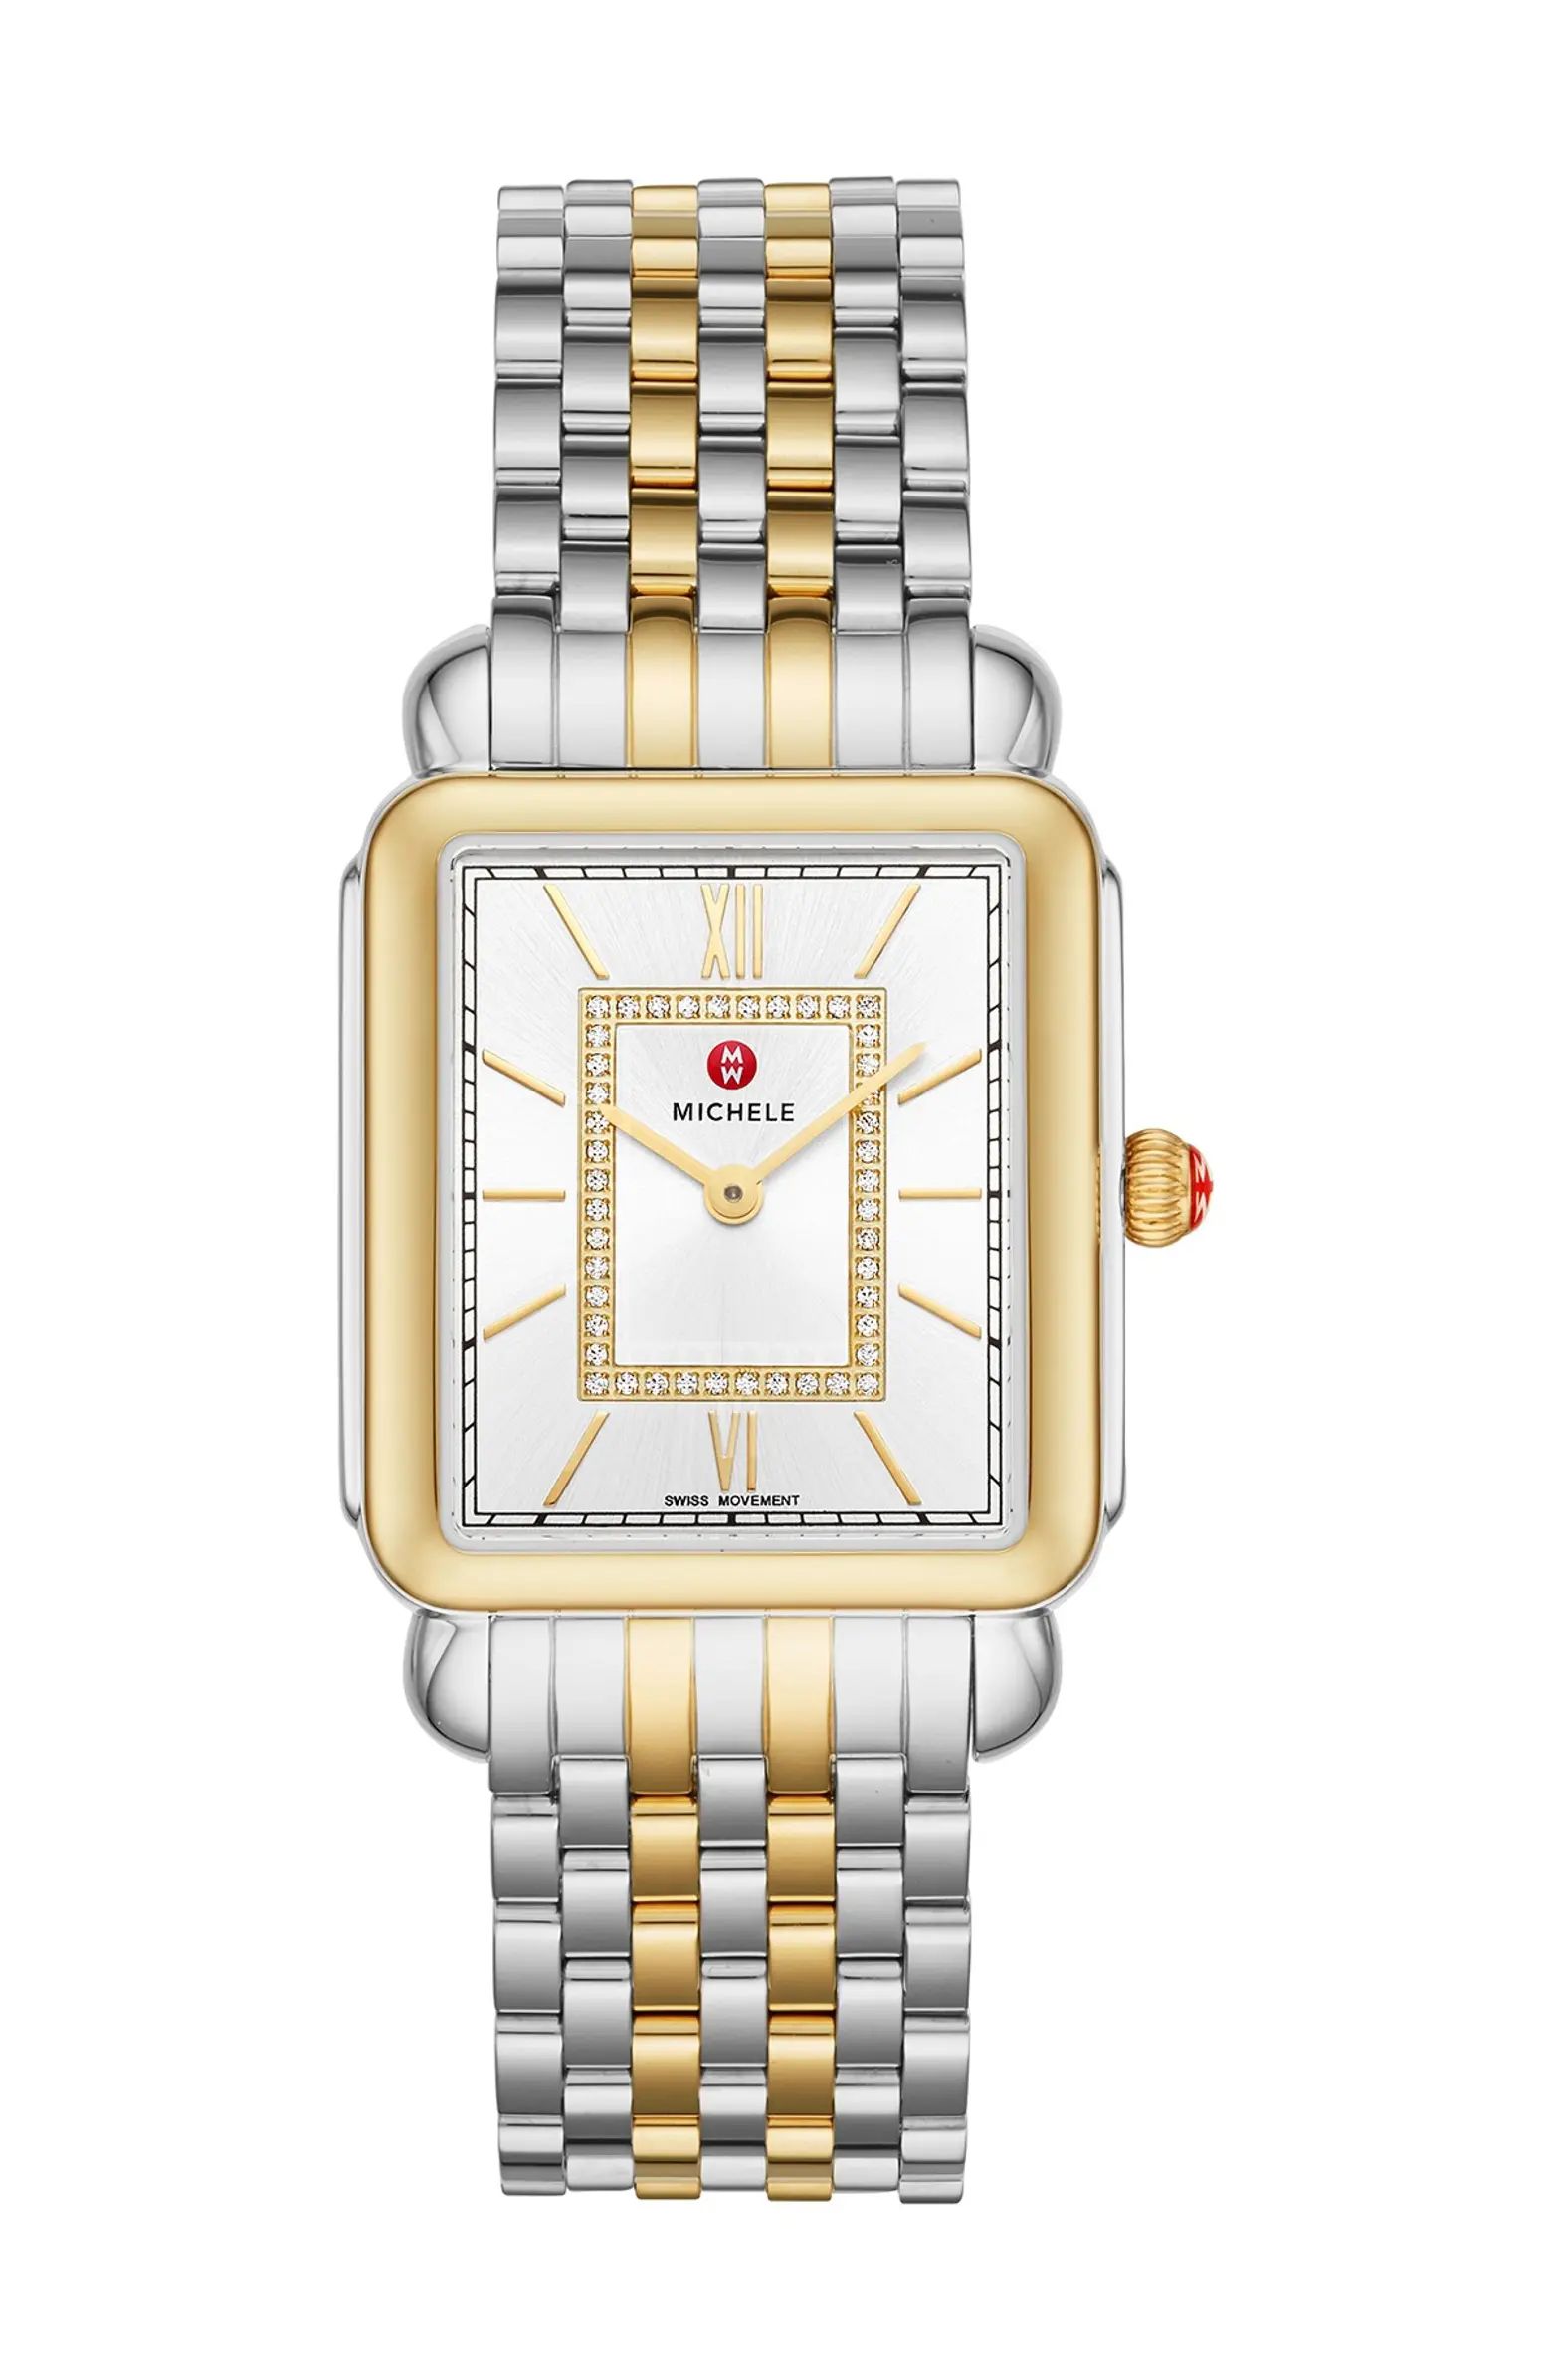 Women's Deco II Diamond Two-Tone Bracelet Watch, 20mm x 43mm - 0.11 ctw | Nordstrom Rack